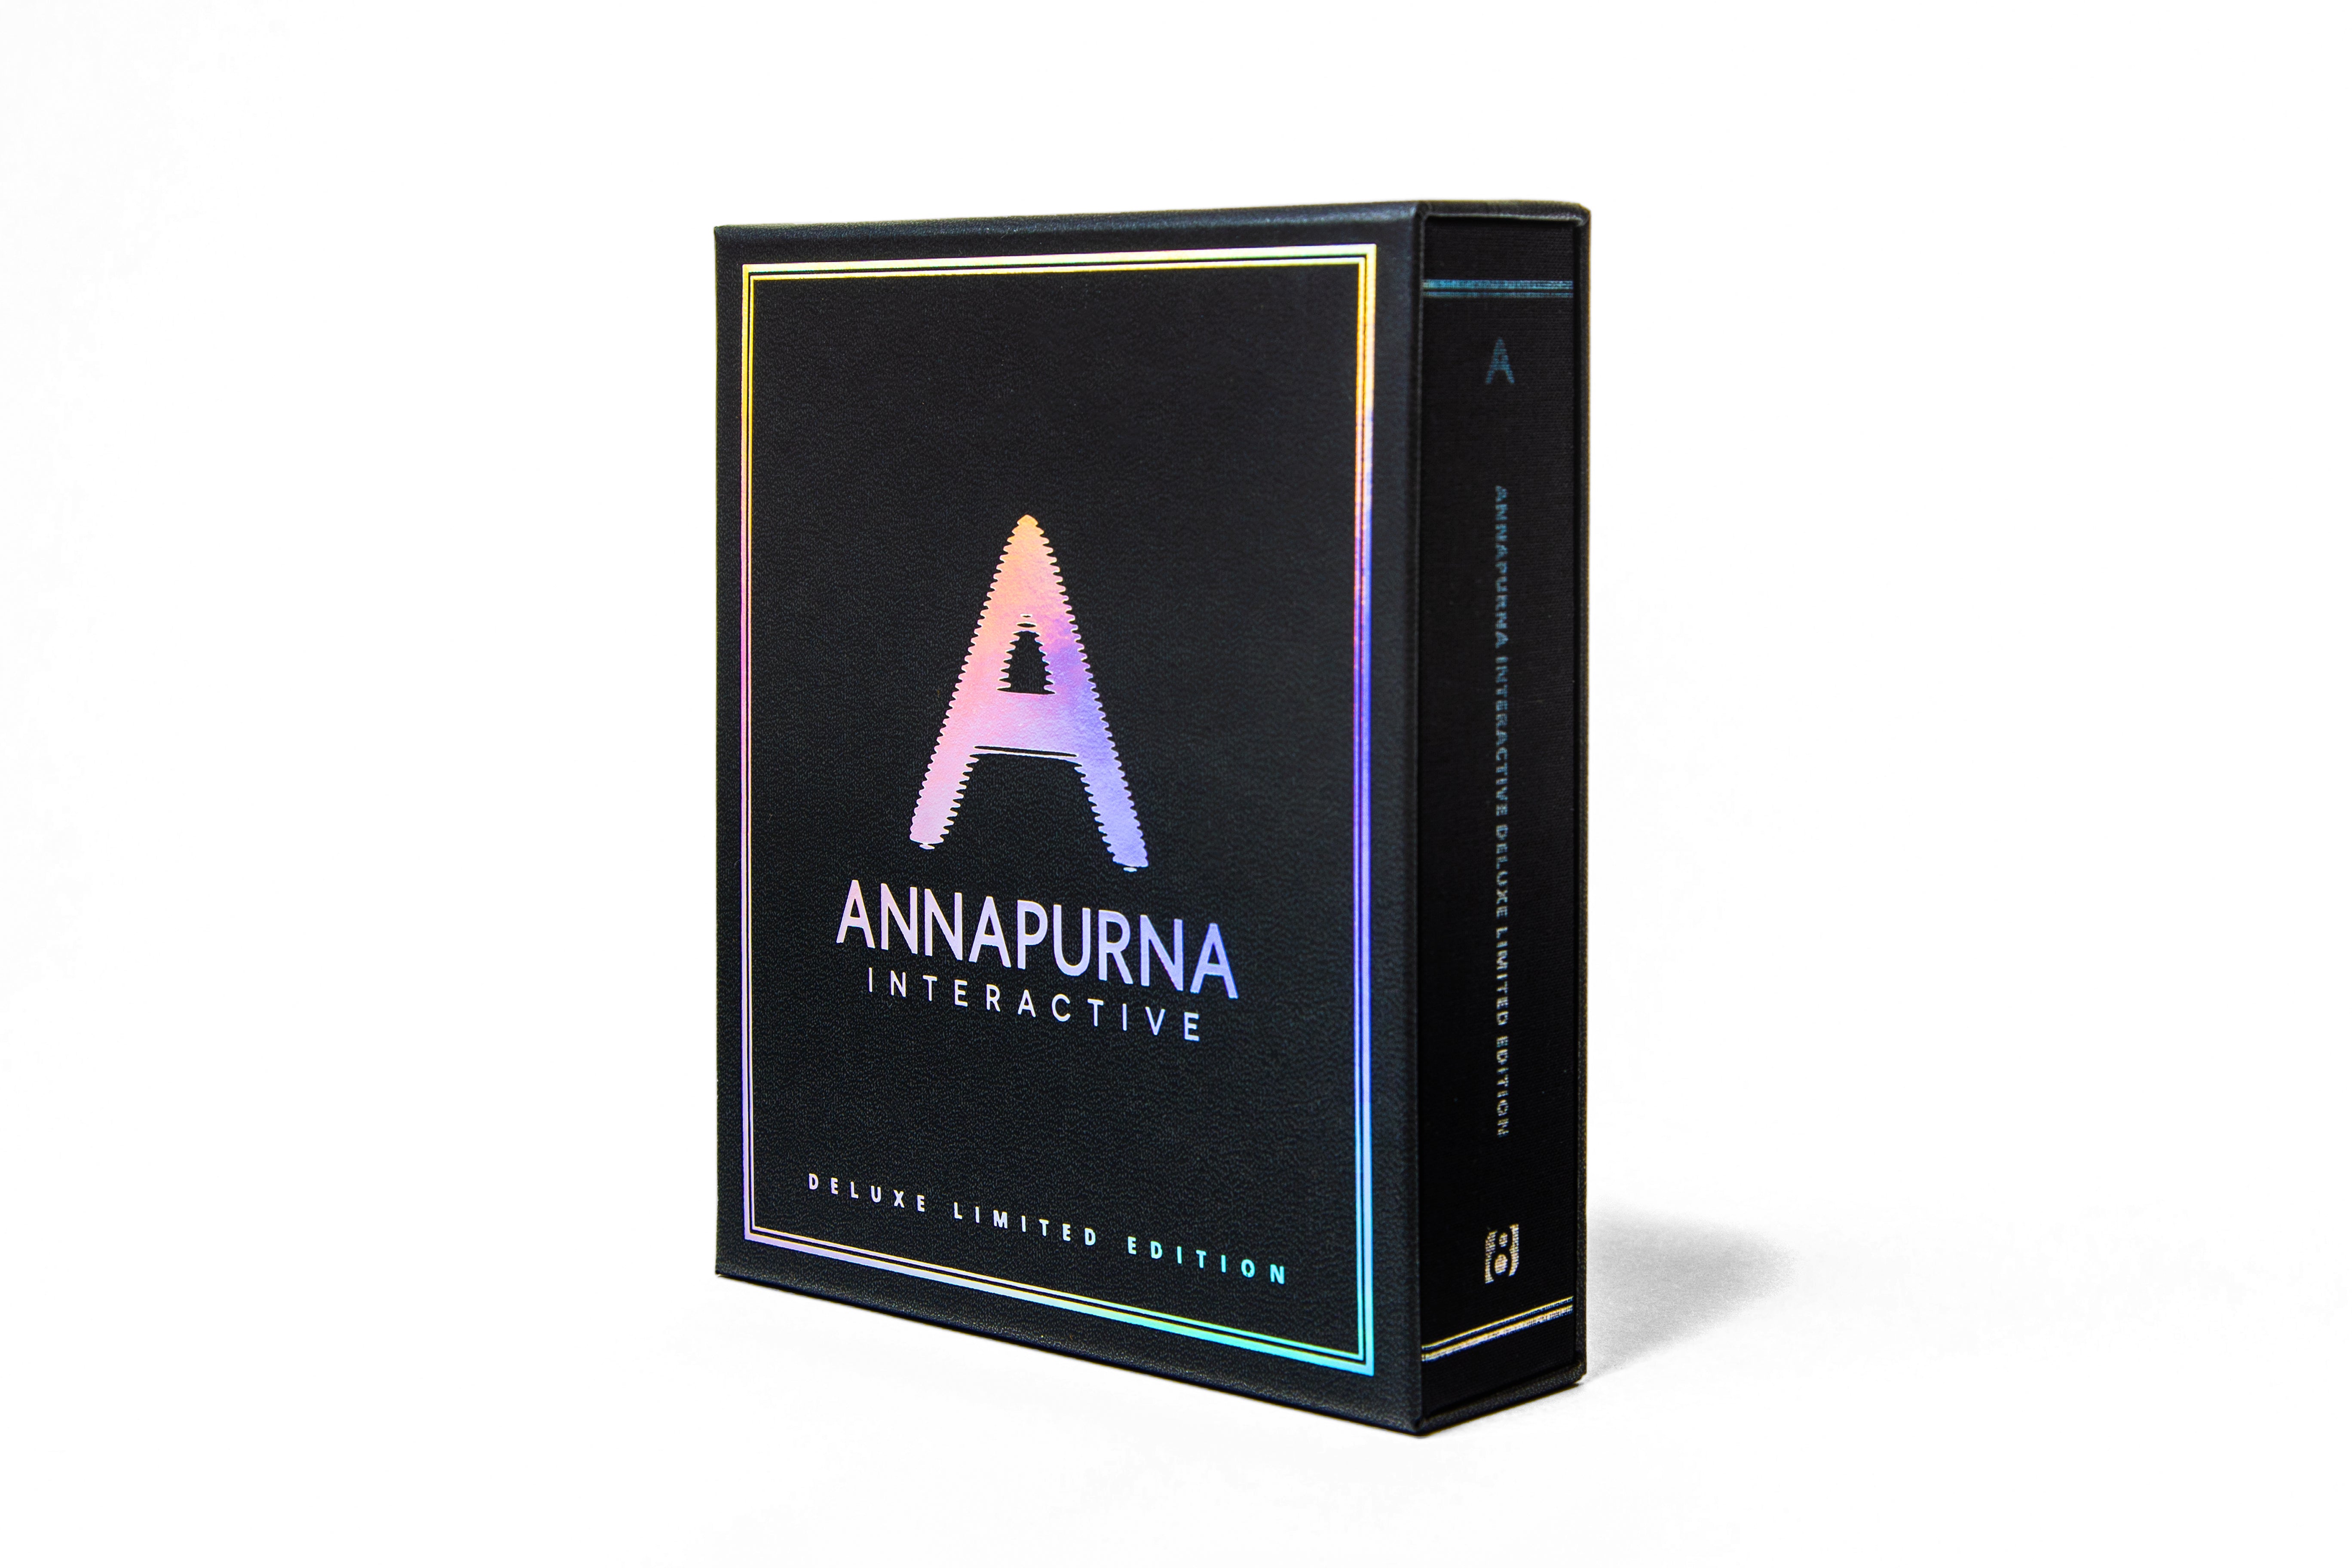 iam8bit | Annapurna Interactive Deluxe Limited Edition PS4 - iam8bit